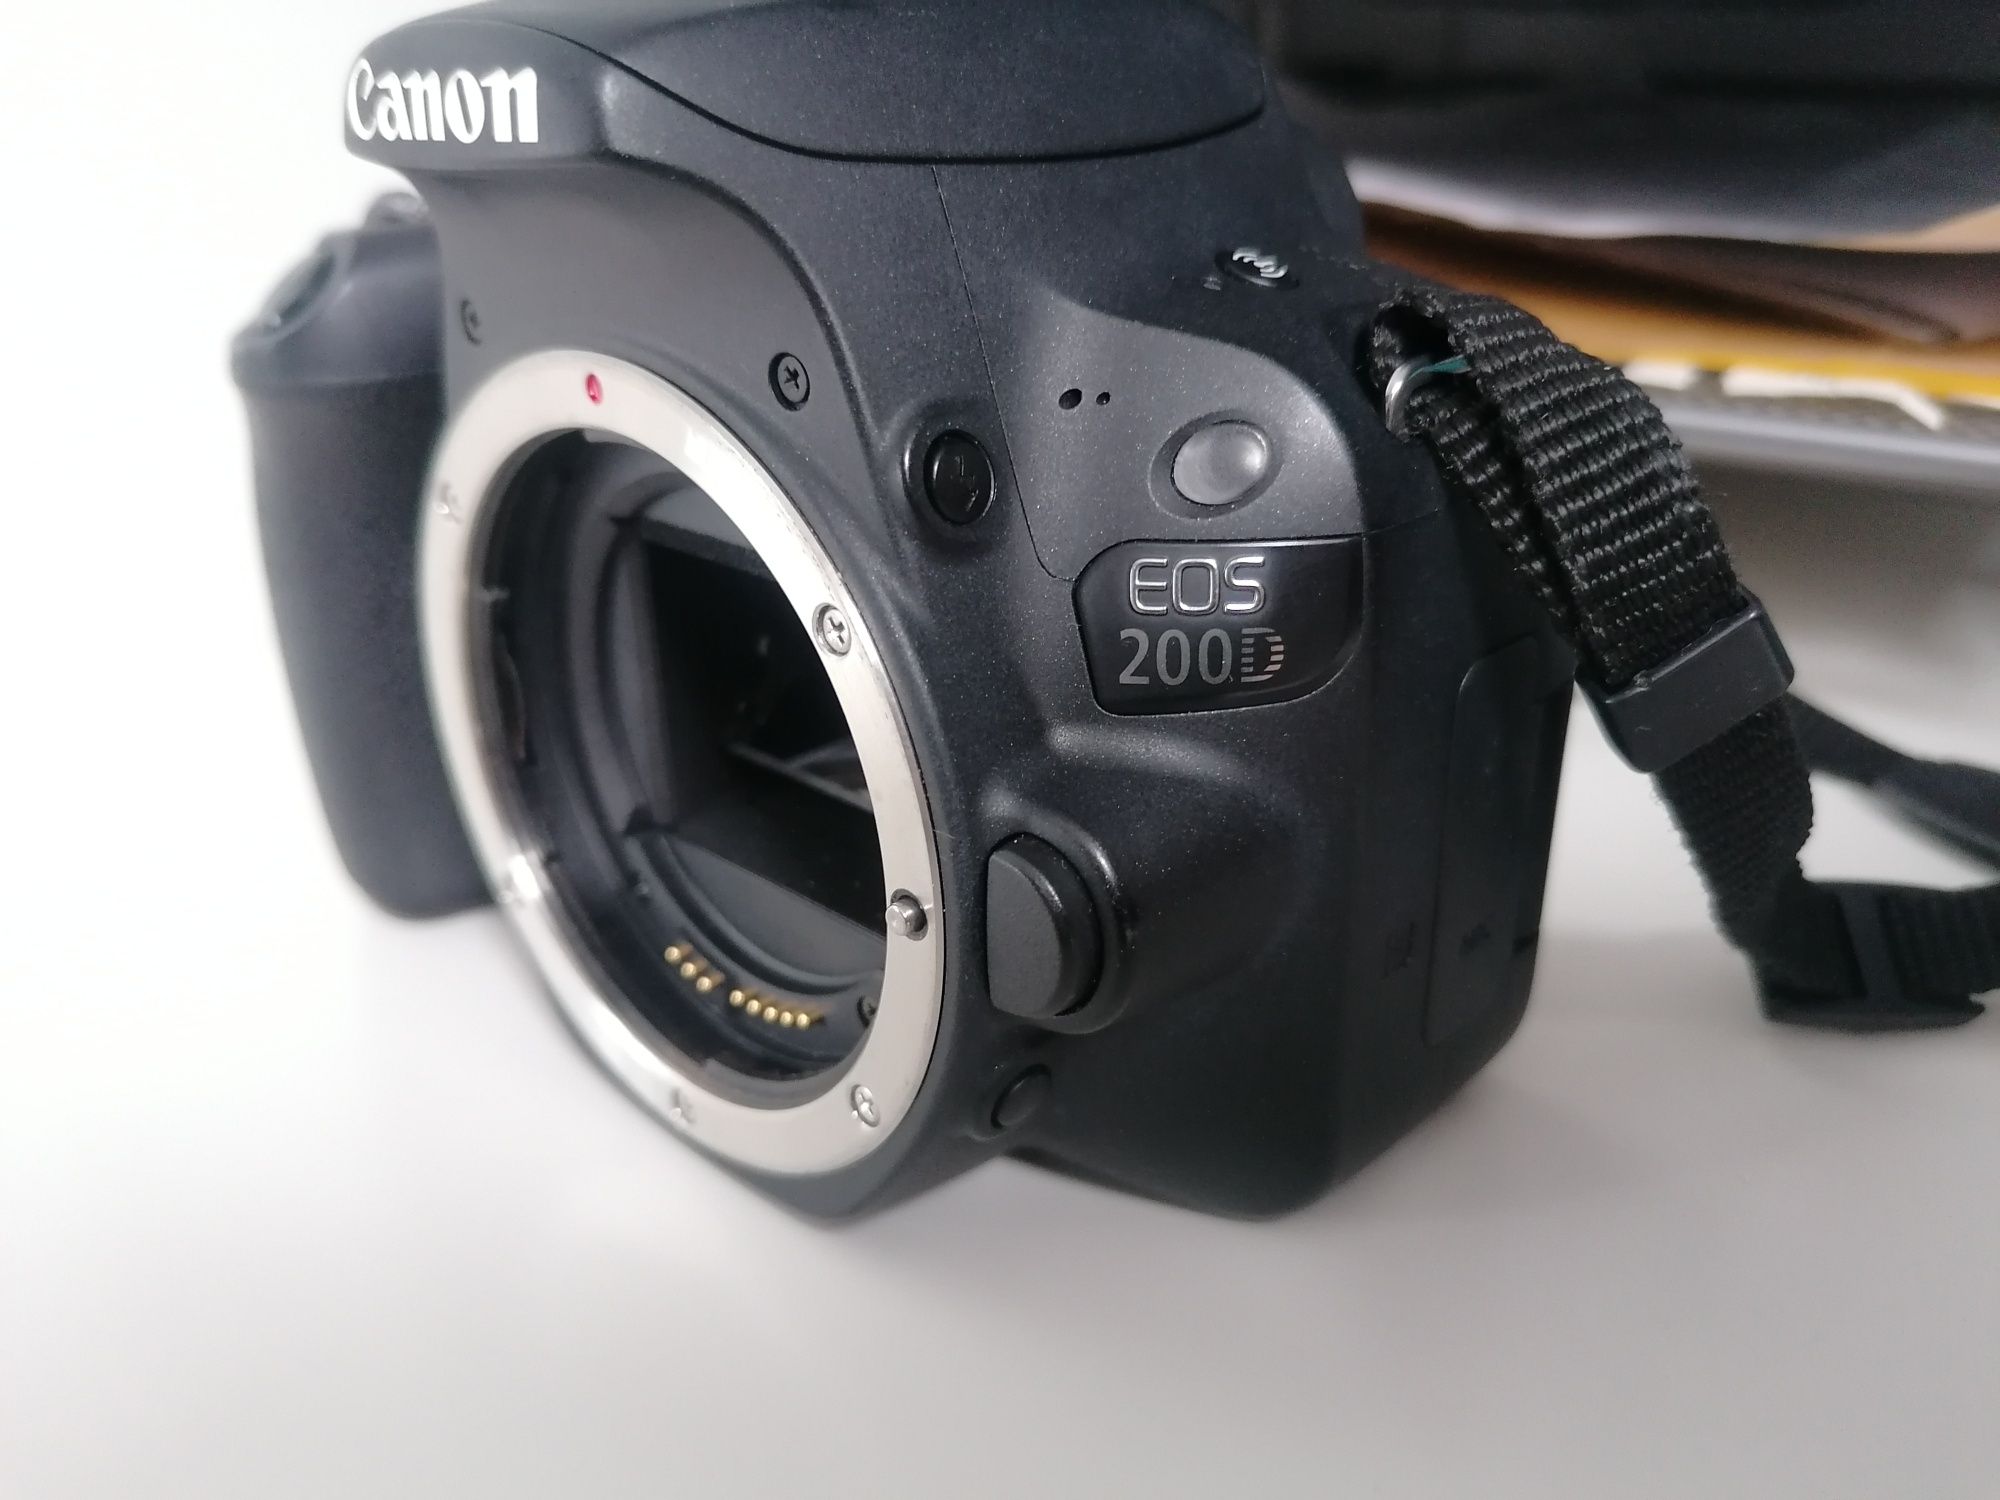 Aparat Canon EOS 200D + 2 akumulatory +torba